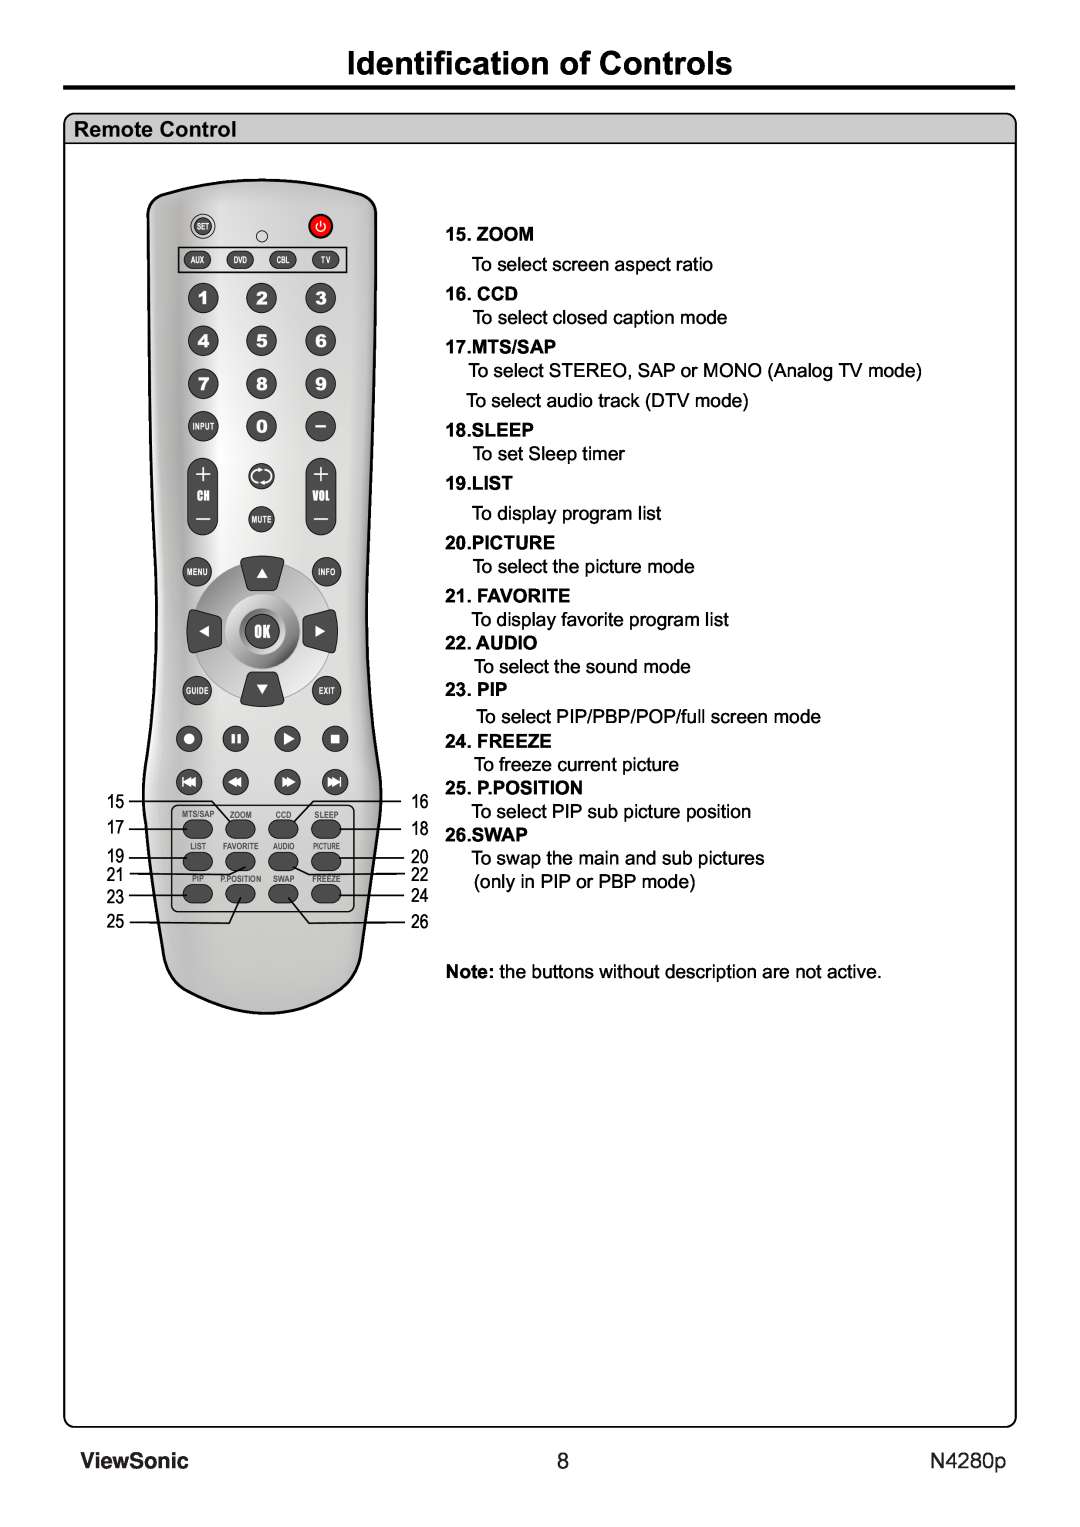 ViewSonic N4280p manual Identification of Controls, Remote Control, ViewSonic, Zoom 